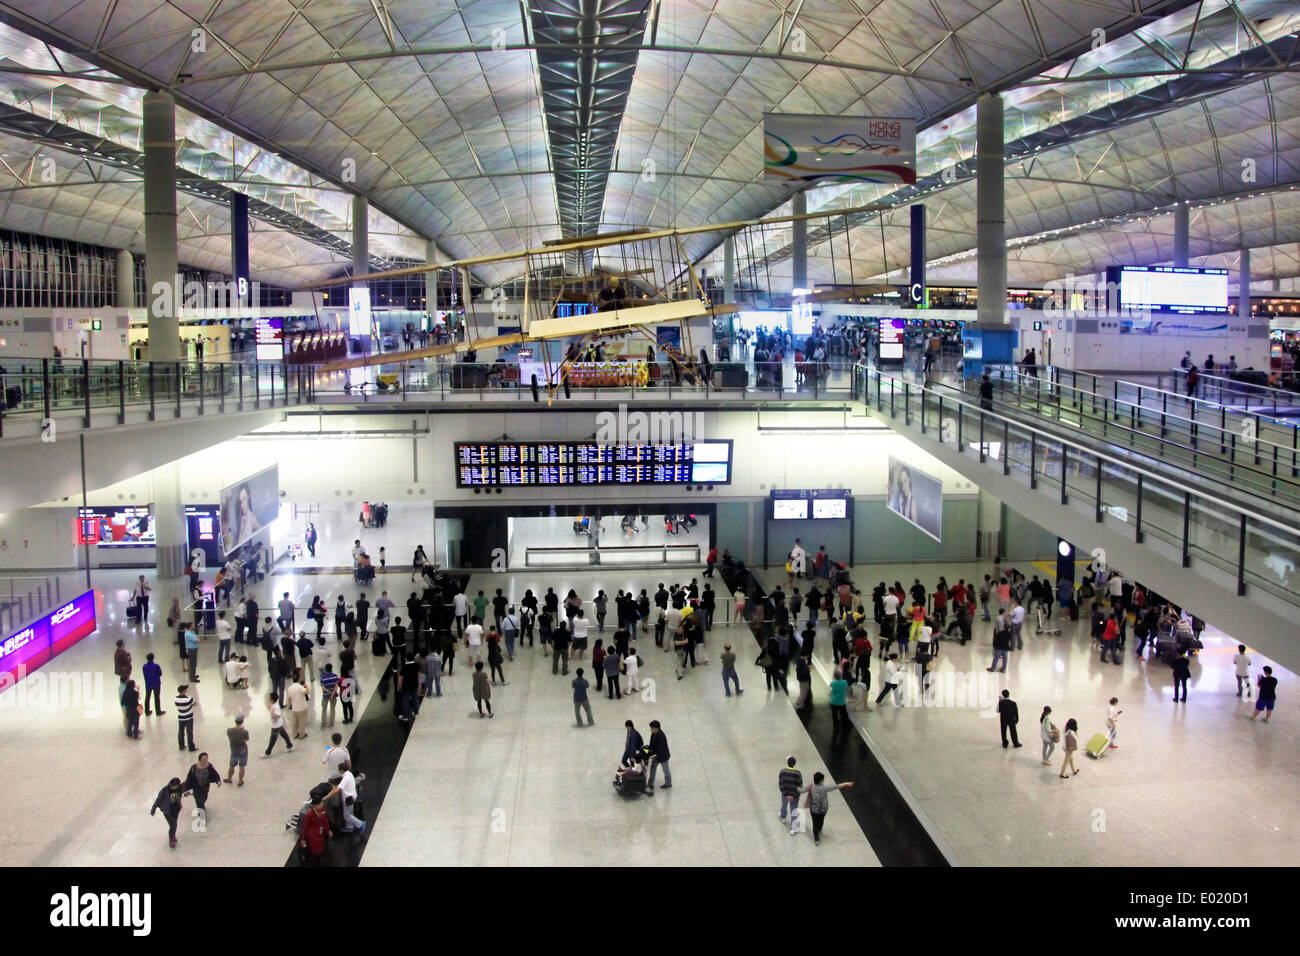 Passengers in the airport main lobby on April 26, 2014 in Hong Kong, China. The Hong Kong airport handles more than 70 million p Stock Photo